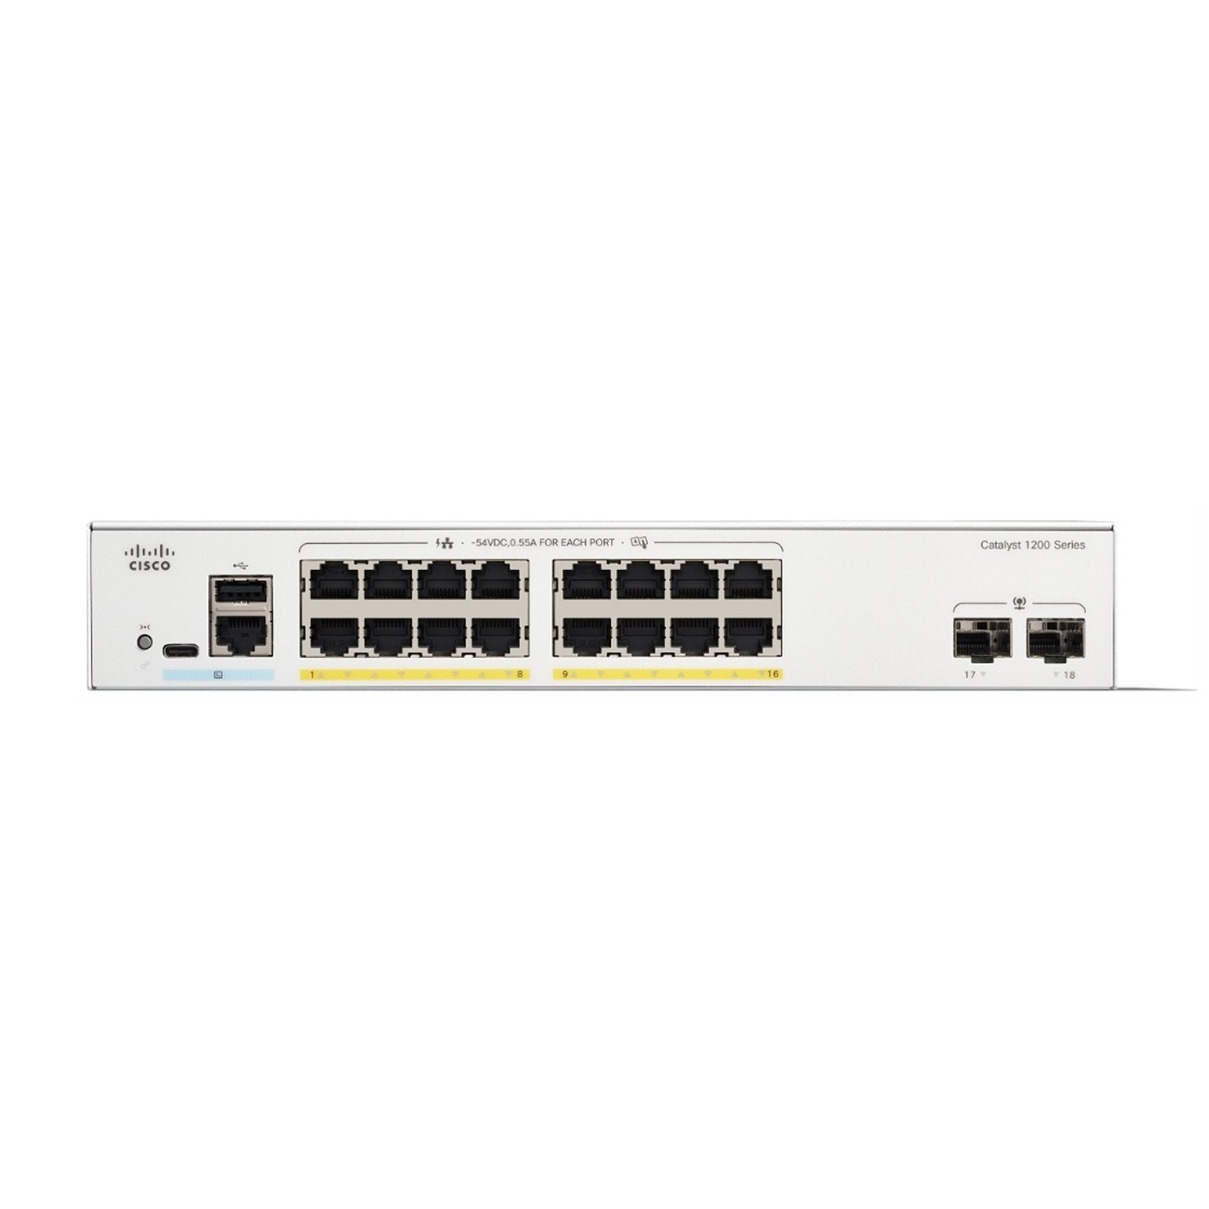 Cisco catalyst C1200-16P, 16 ports gigabit POE+ 120W + 2 x 1G SFP uplink ports switch